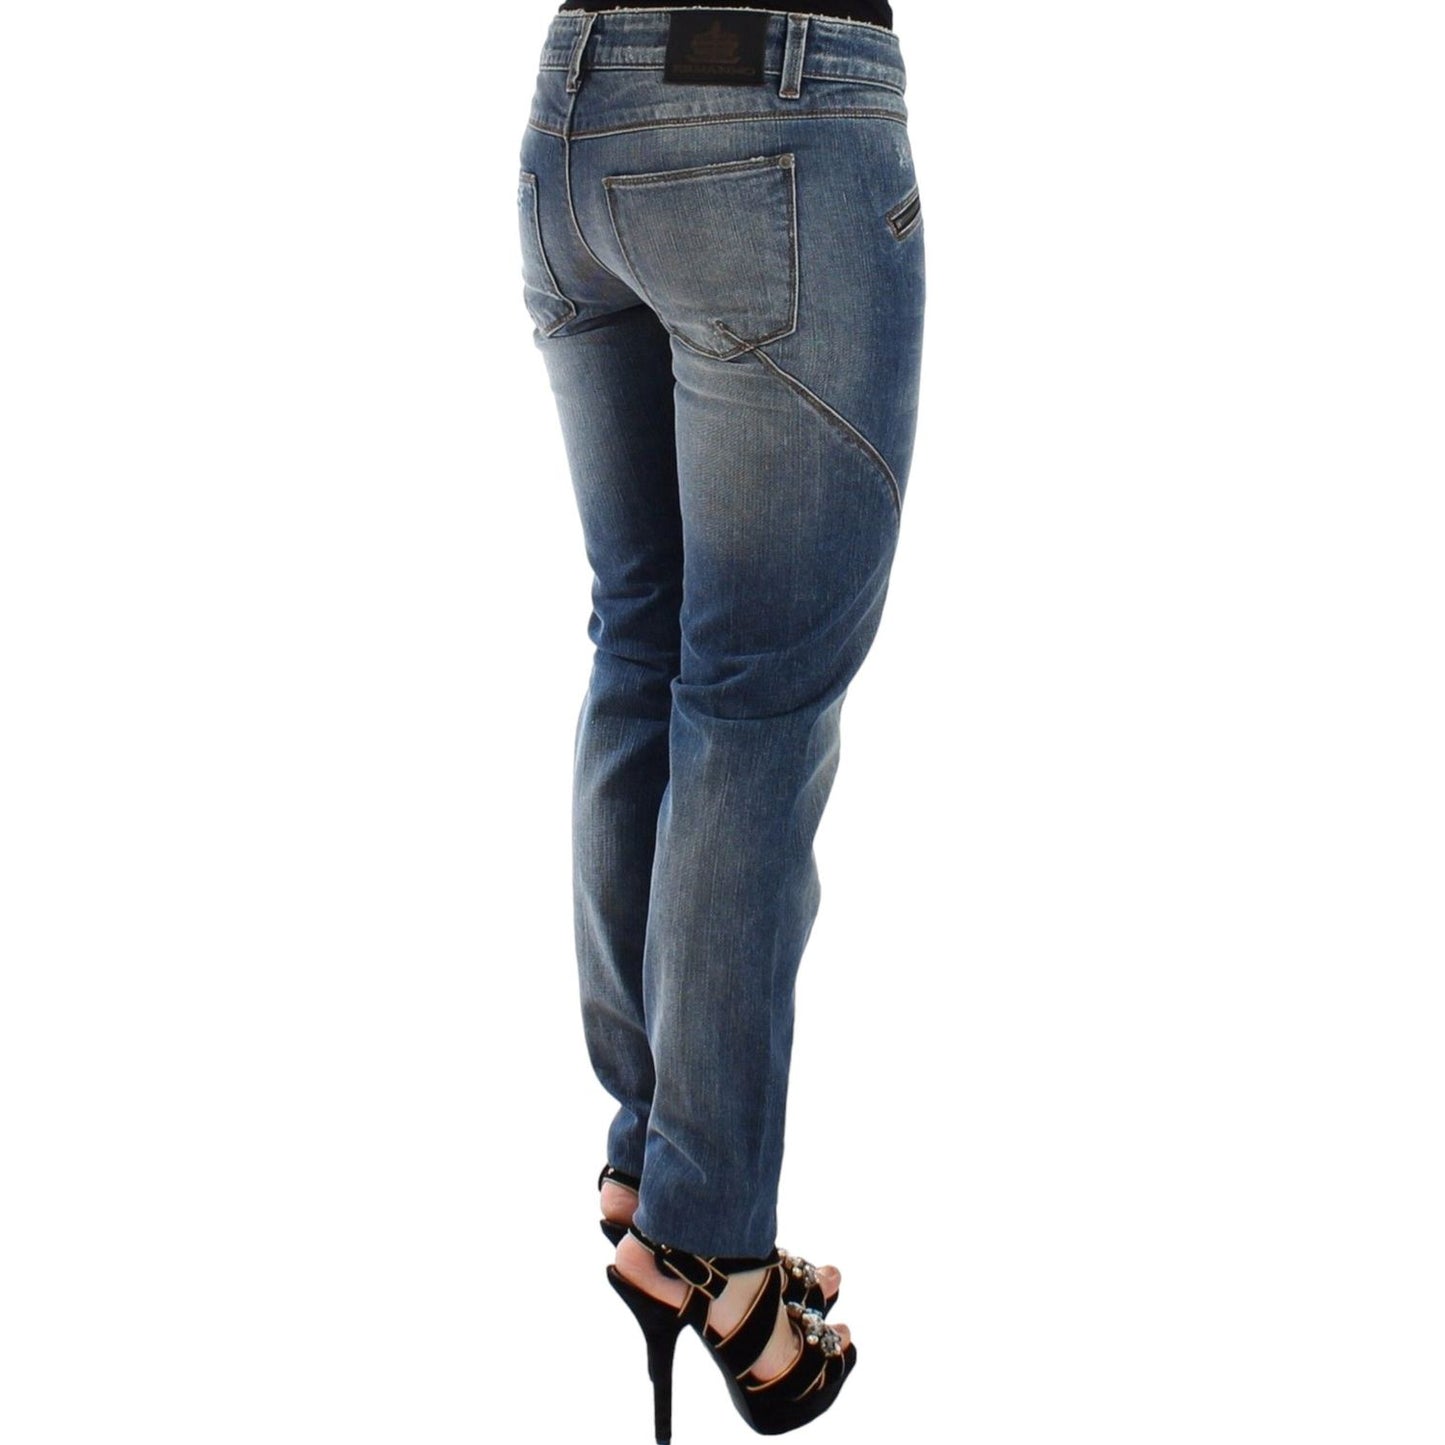 Ermanno Scervino Blue Slim Jeans Denim Pants Straight Stretch blue-slim-jeans-denim-pants-straight-stretch 36658-ermanno-scervino-blue-slim-jeans-denim-pants-straight-stretch-2-3-scaled-c32e65b0-da1.jpg